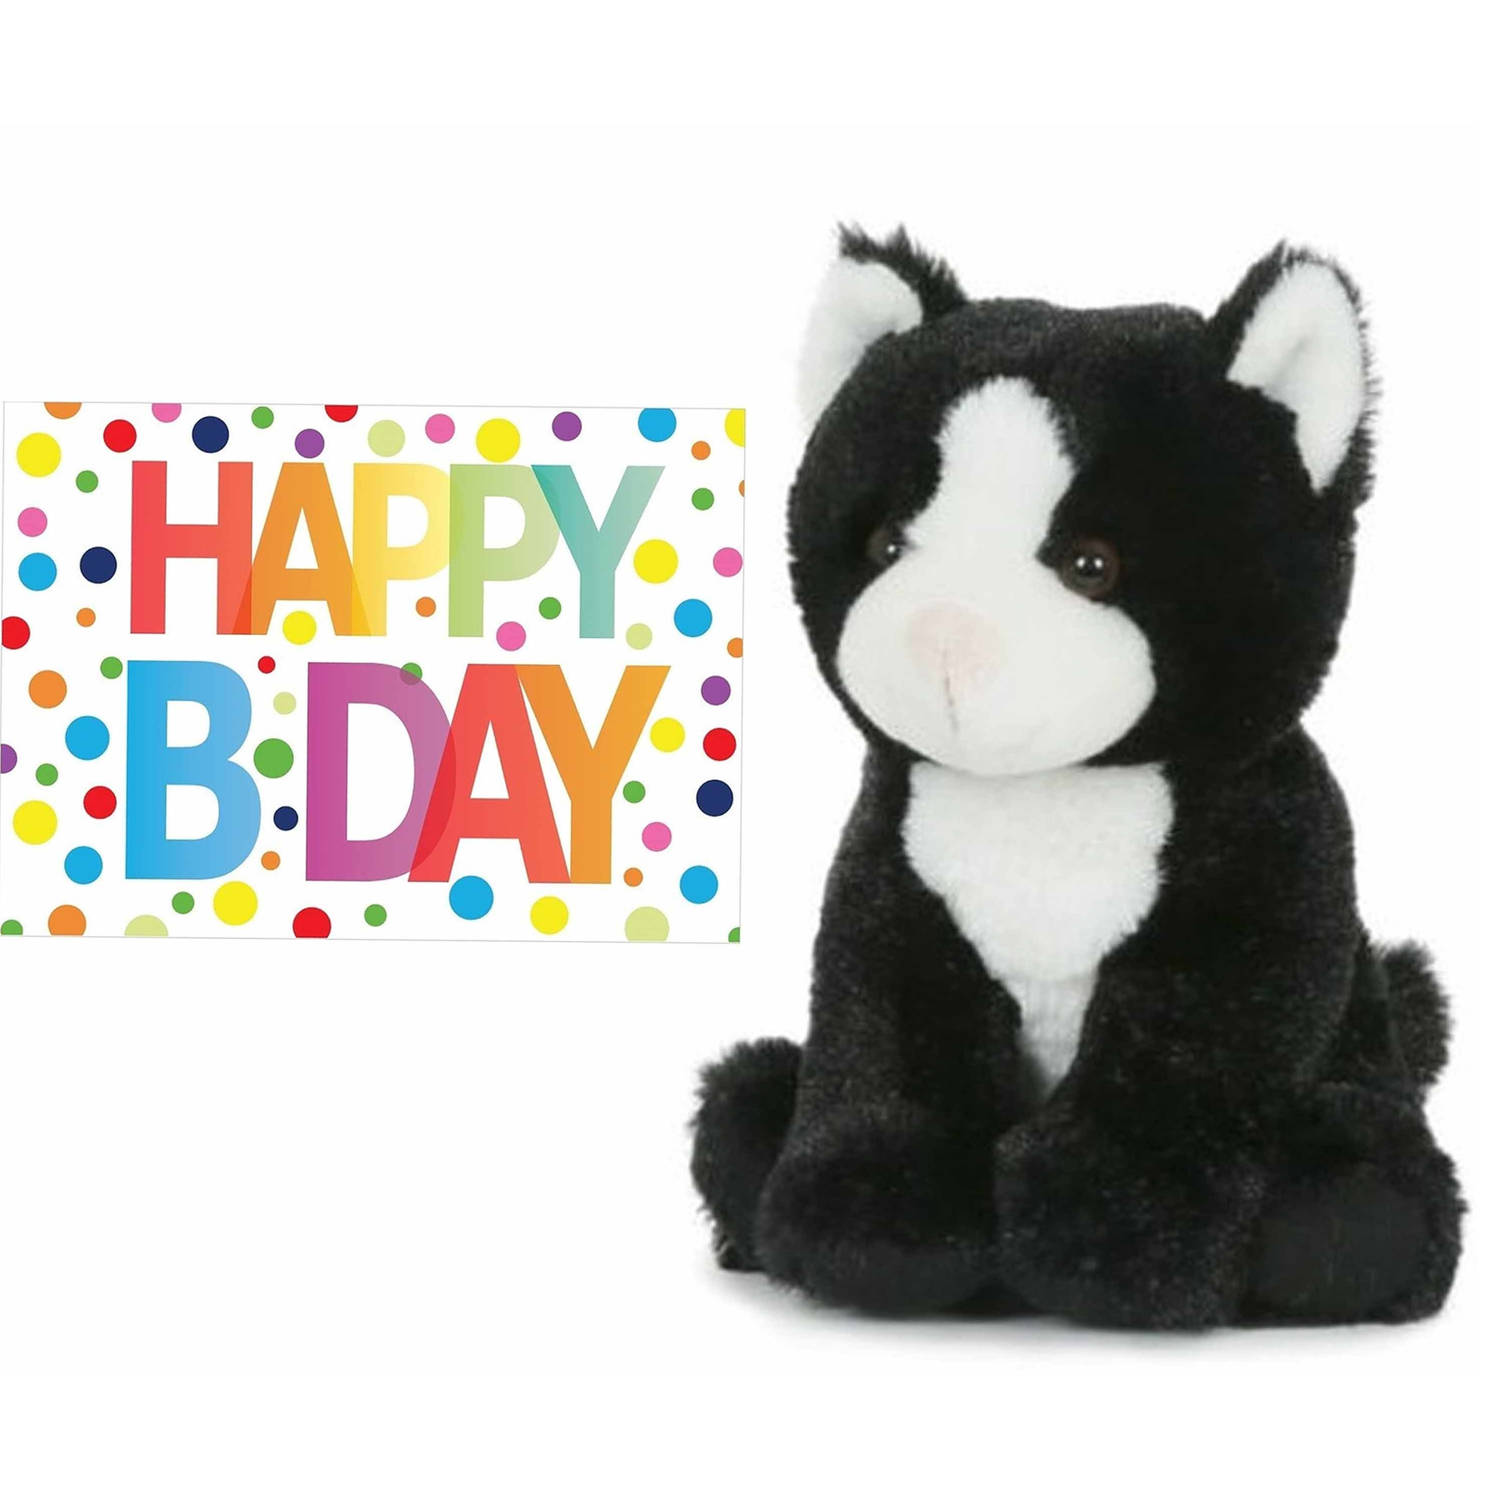 Pluche knuffel kat-poes zwart-wit 18 cm met A5-size Happy Birthday wenskaart Knuffel huisdieren